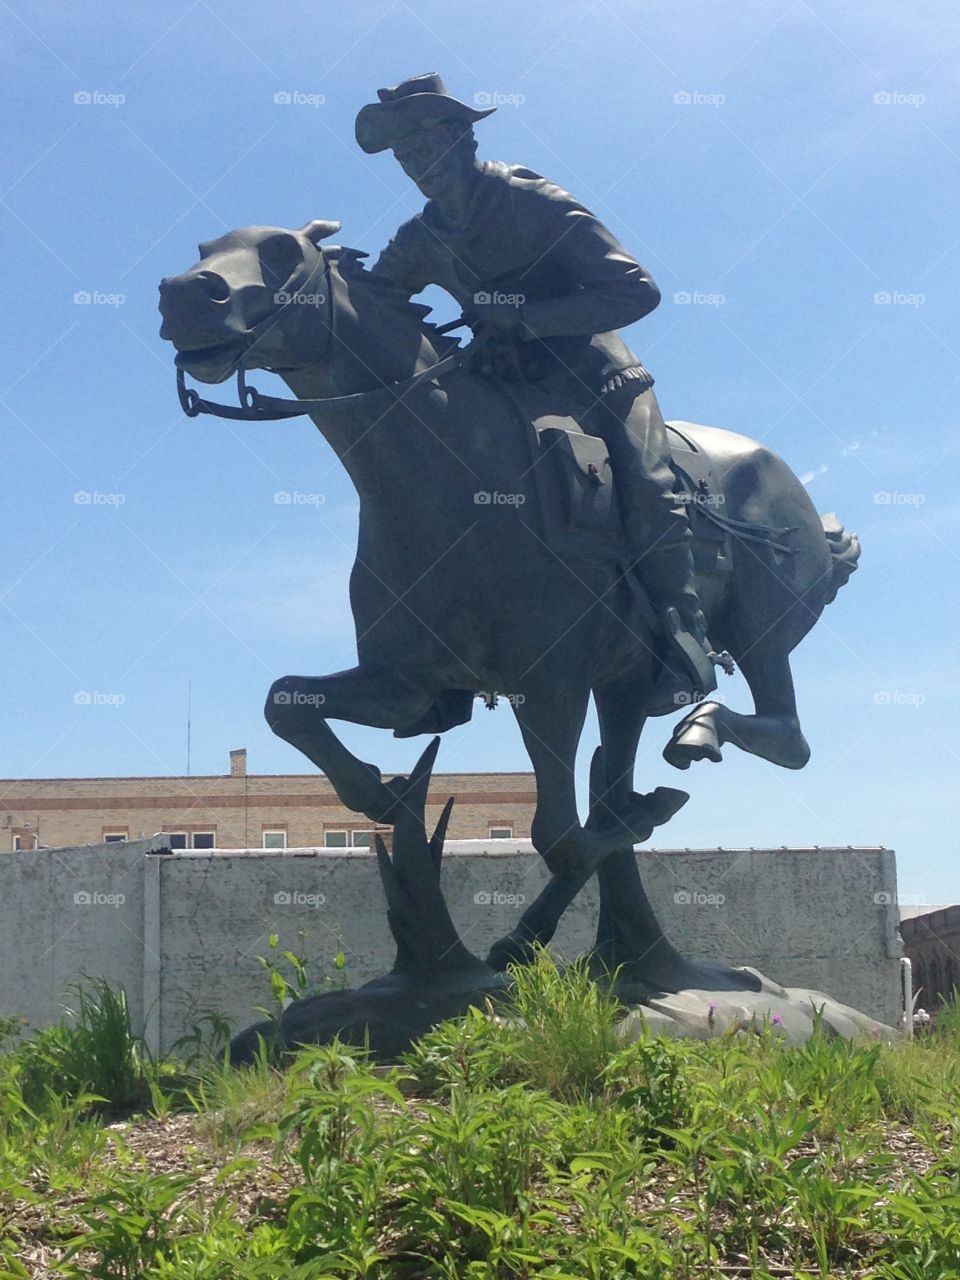 Pony Express statue in Marysville, KS